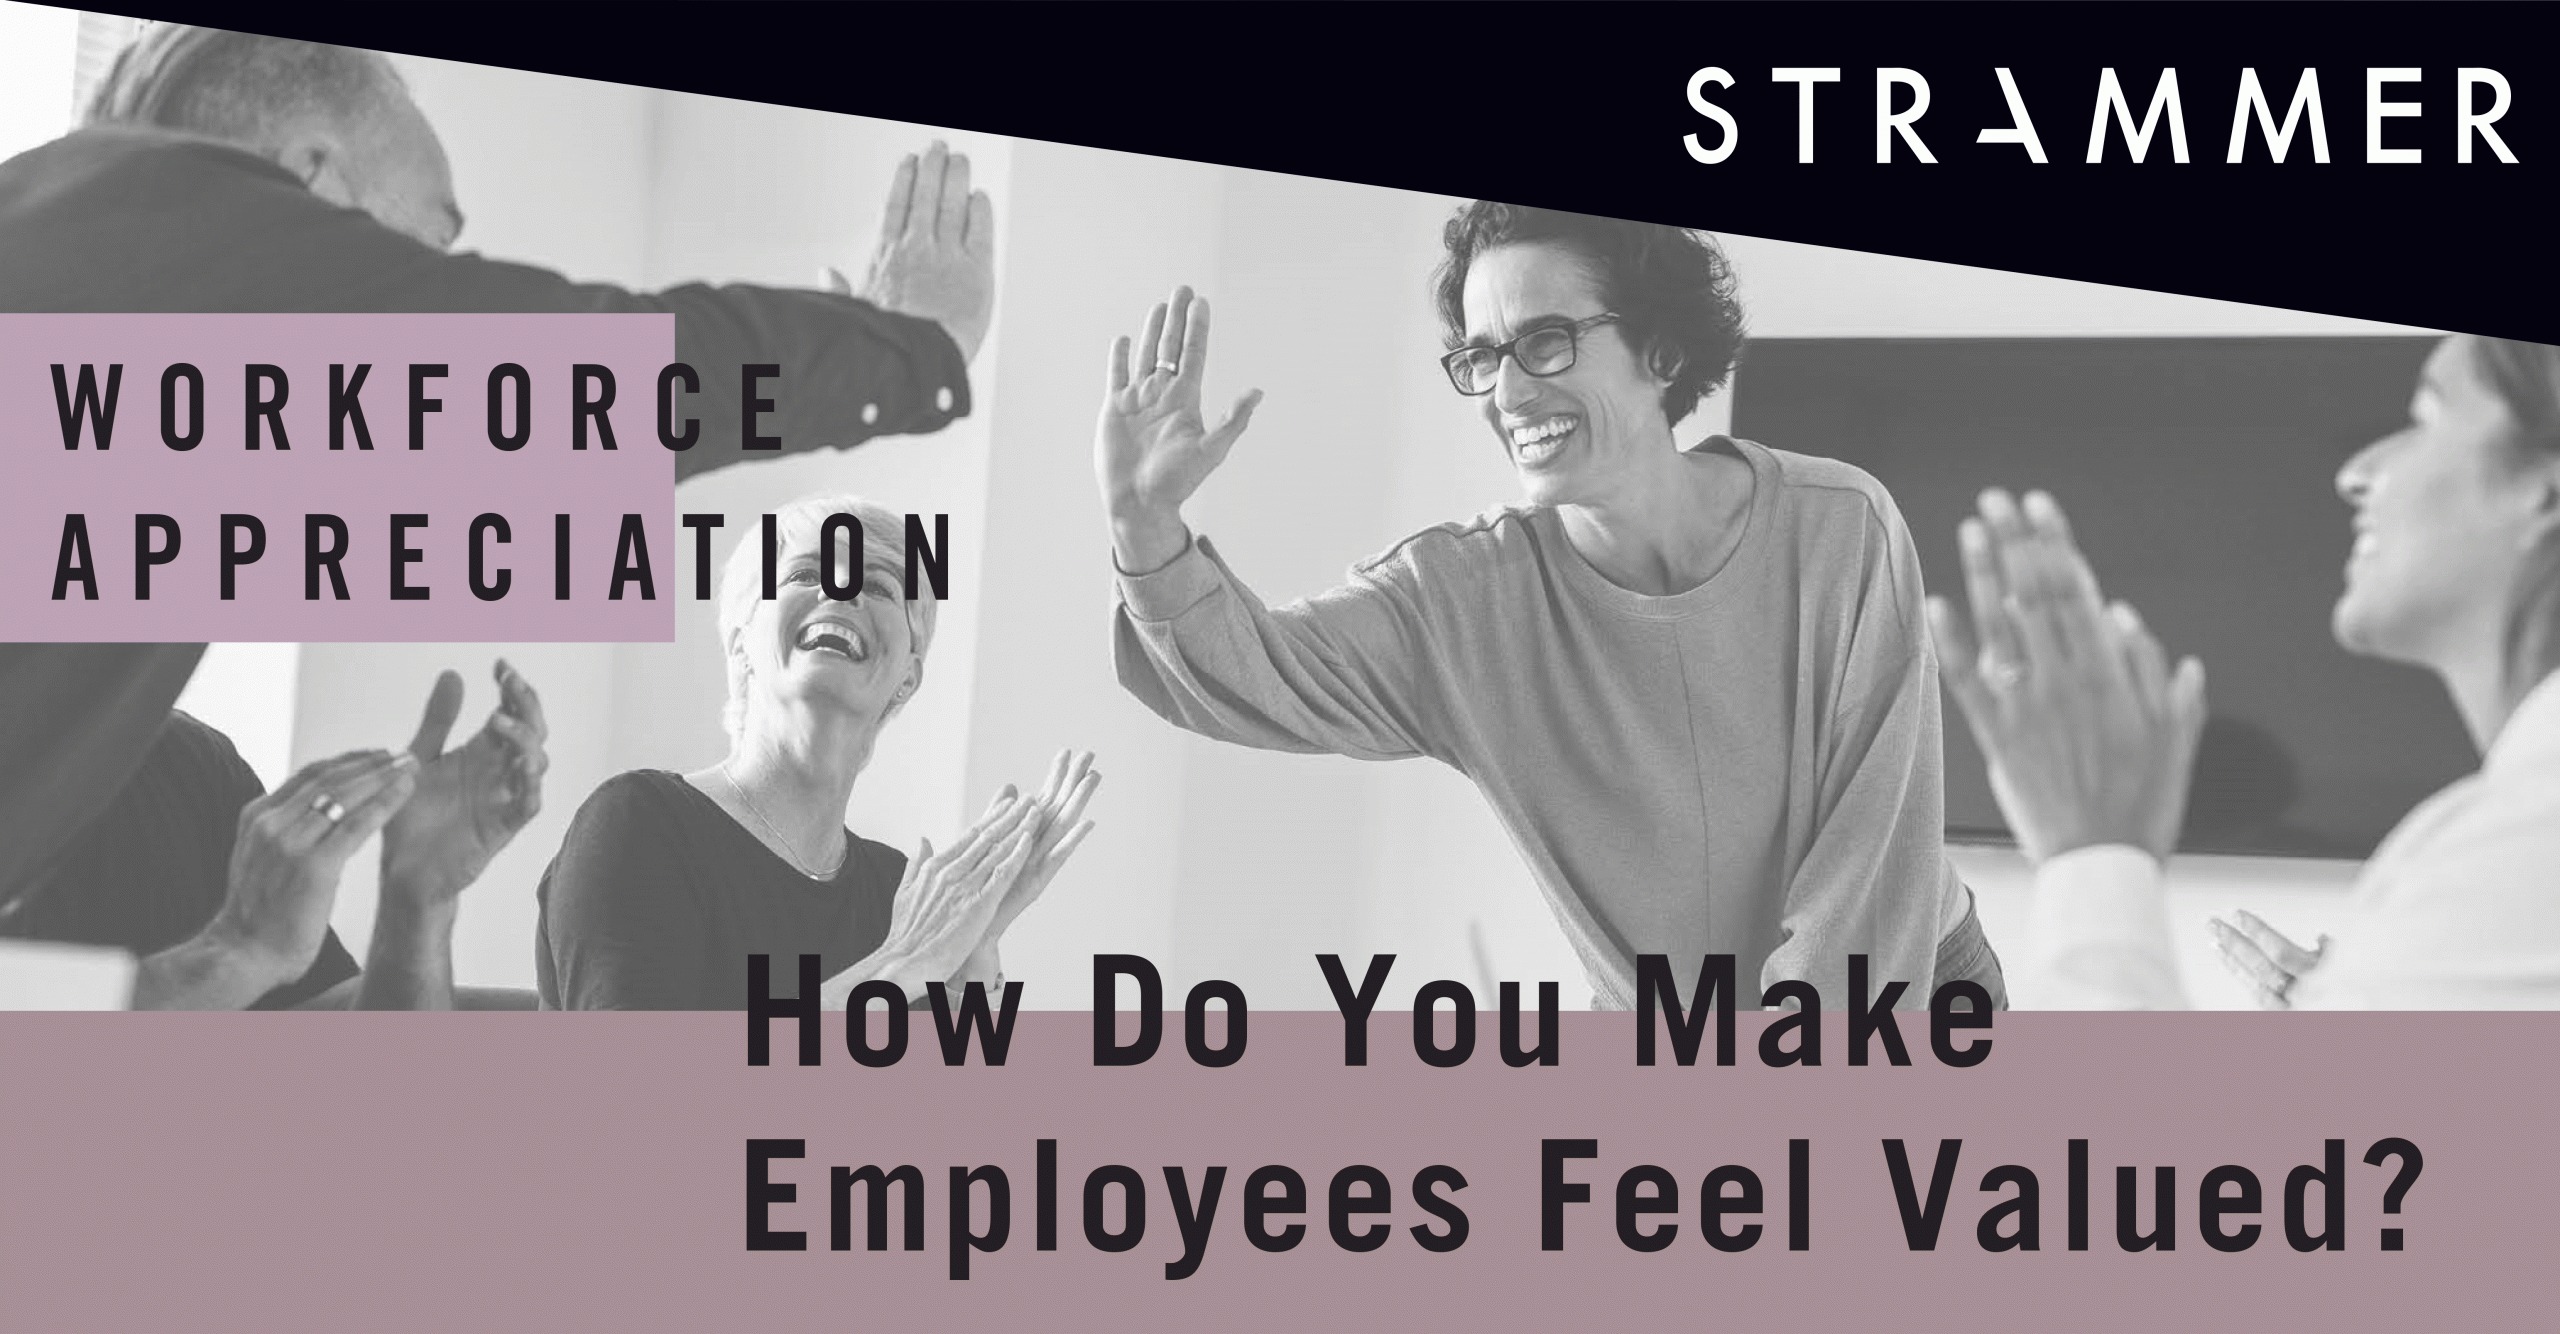 Strategies to Make Employees Feel Appreciated